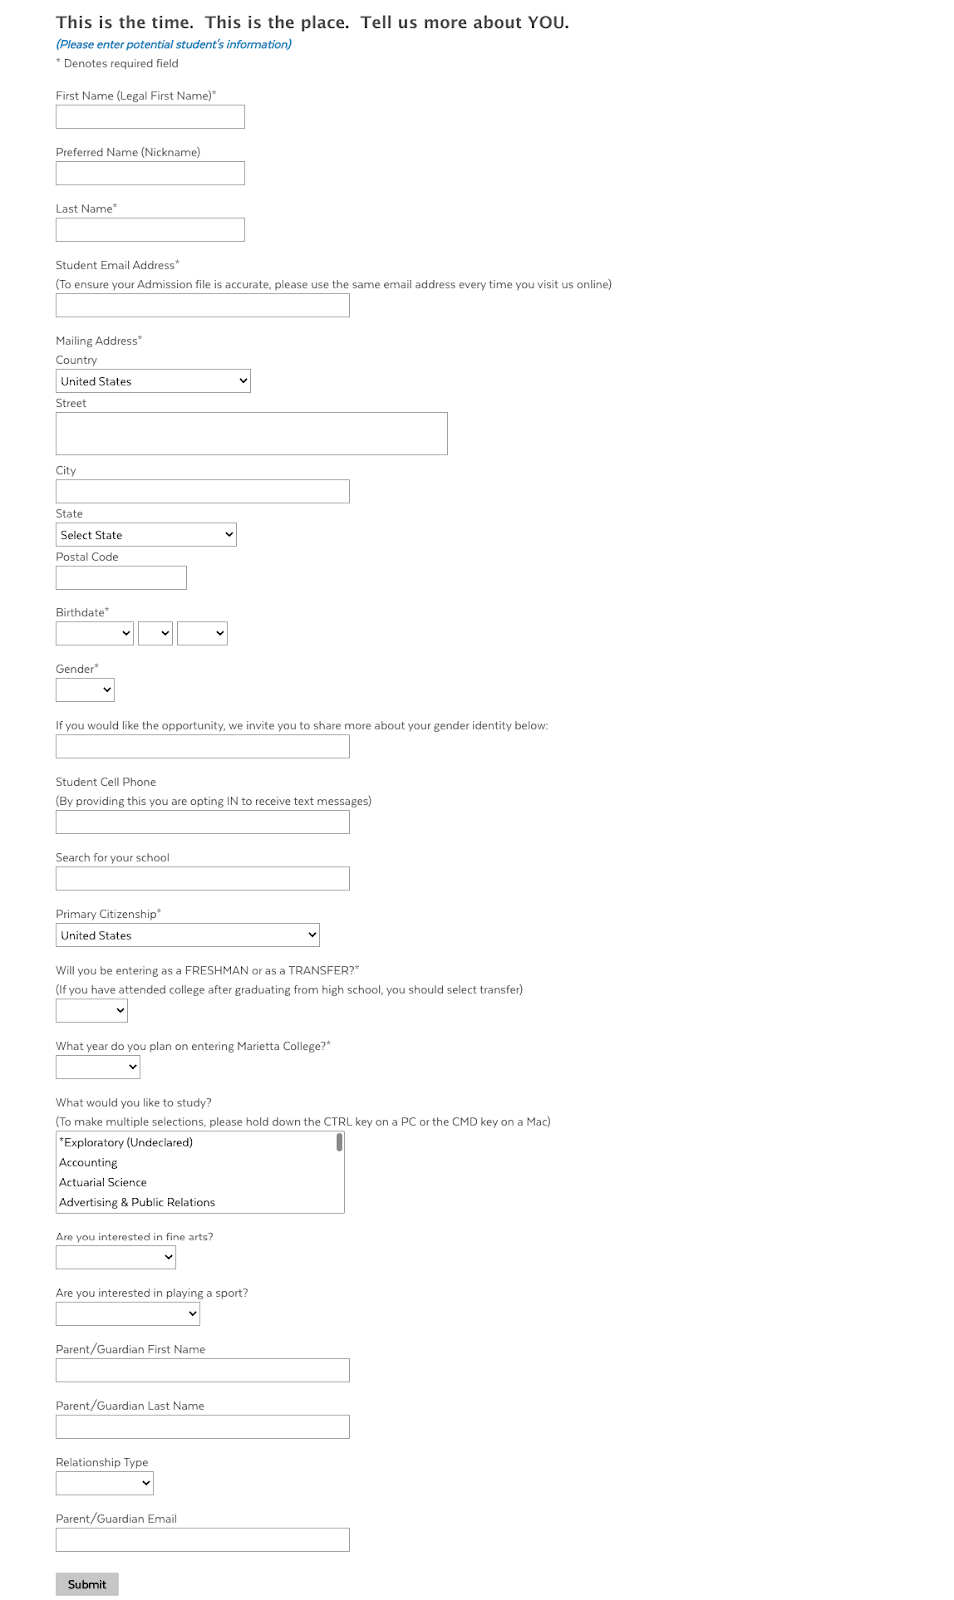 university web form